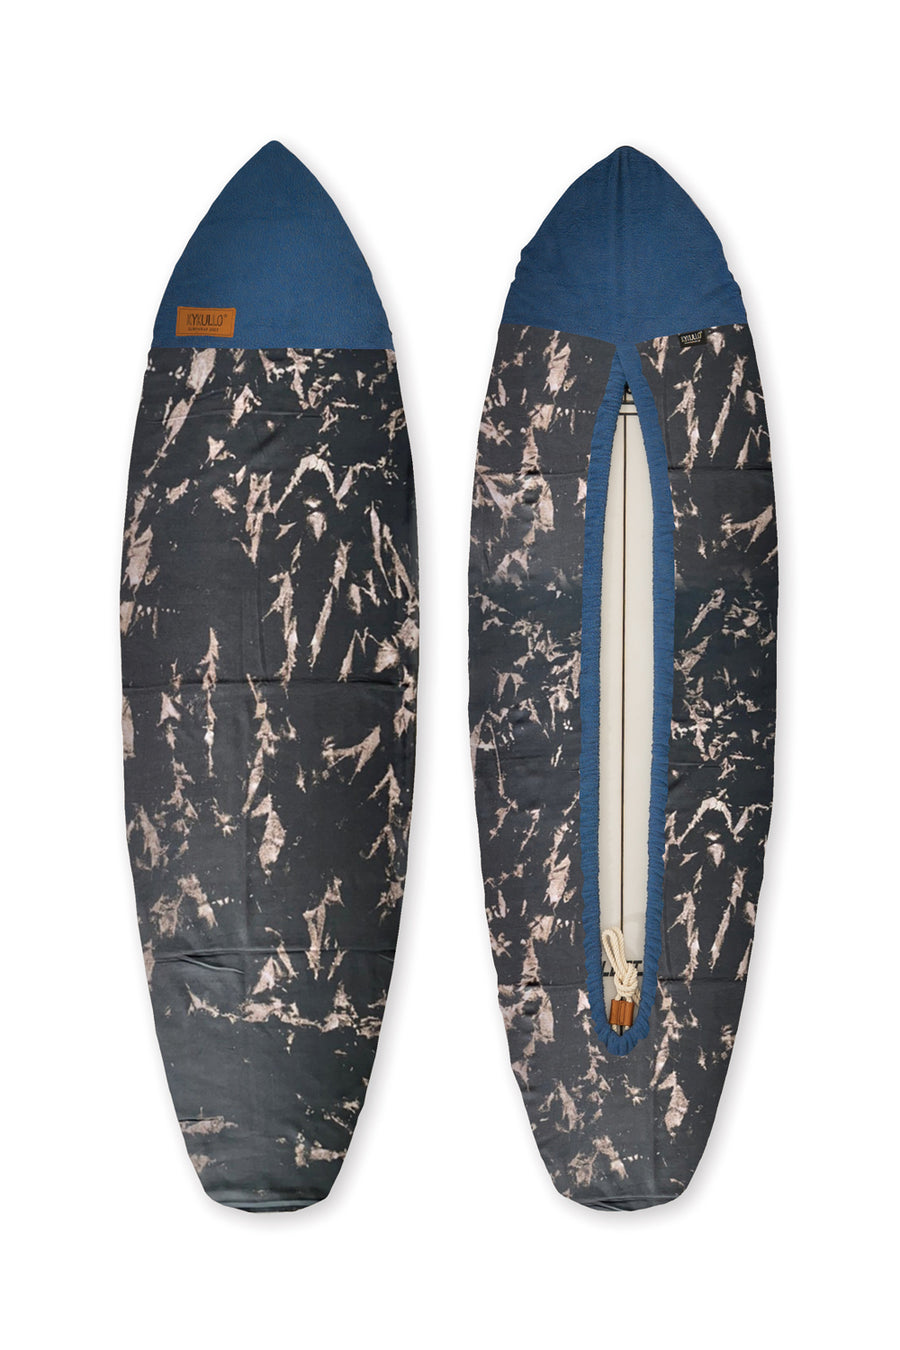 SURFWRAP 6'4 - NAVY